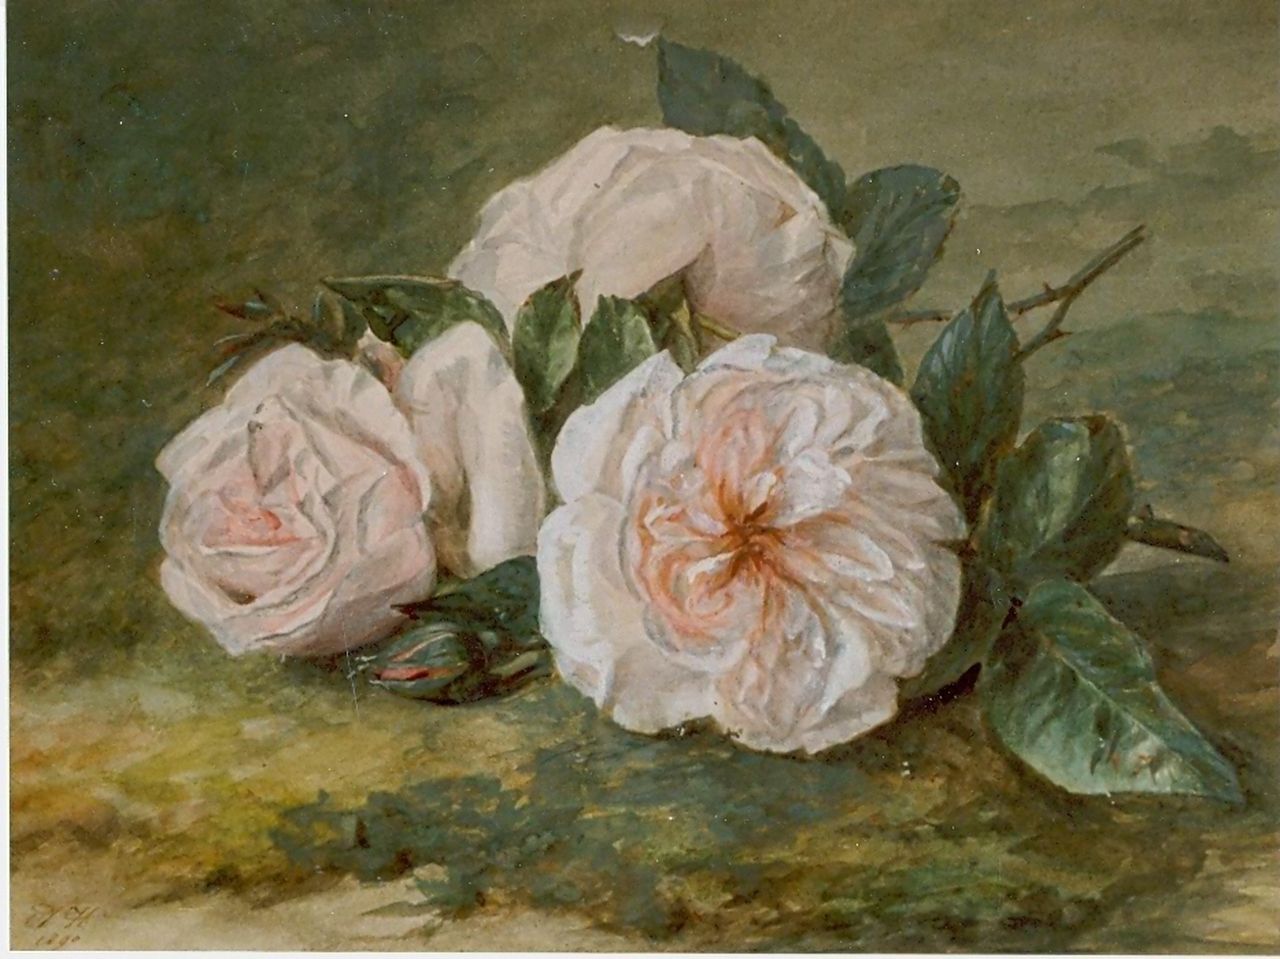 Haanen A.J.  | Adriana Johanna Haanen, A twig of pink roses, Aquarell auf Papier 21,0 x 25,6 cm, signed l.l und dated 1890